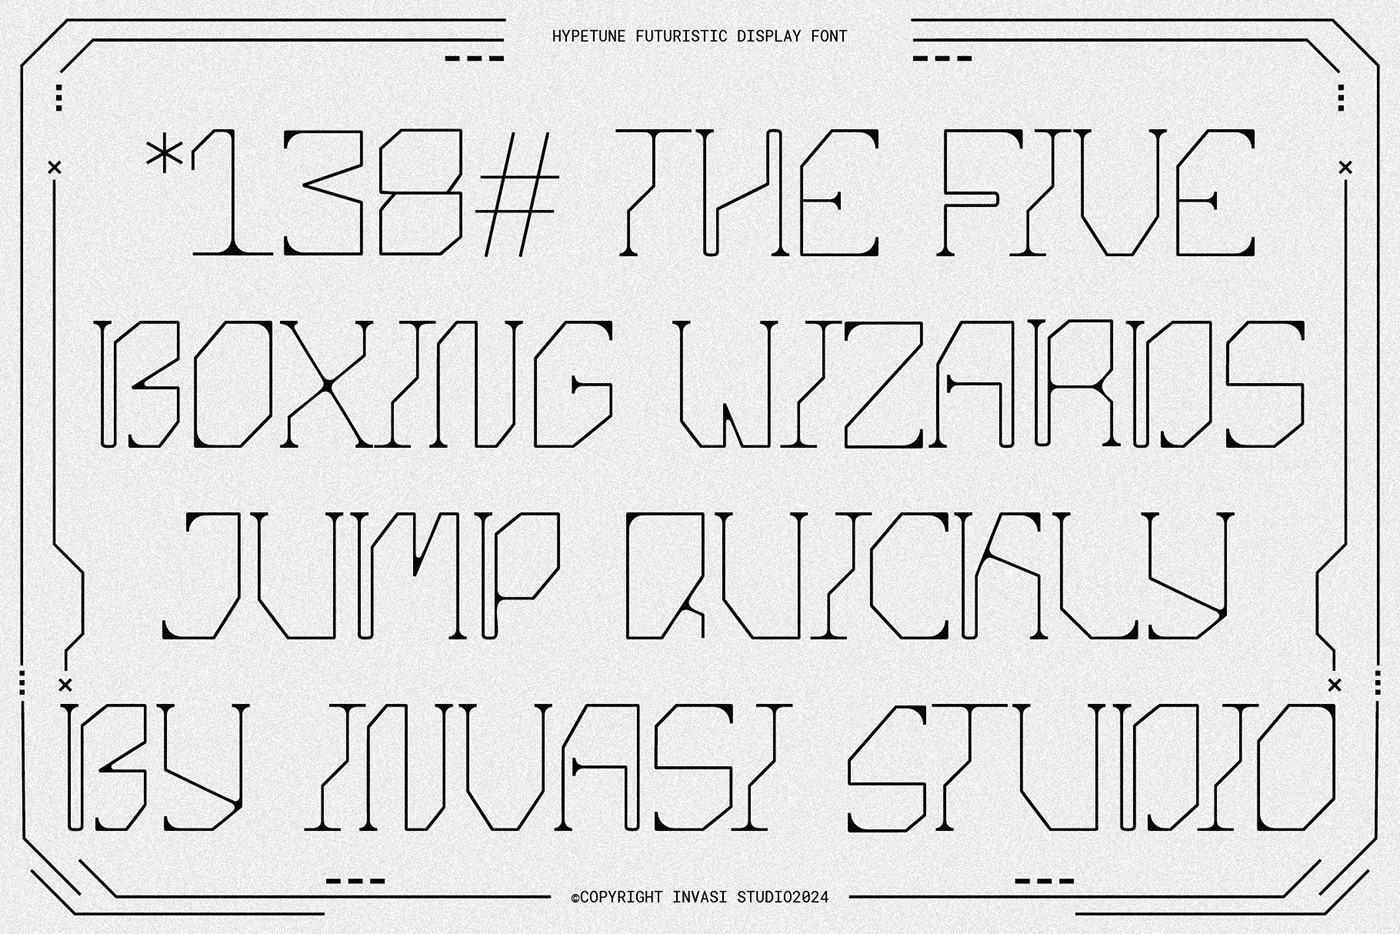 cyperpunk futuristic neon future Technology logo Free font typography   poster Scifi